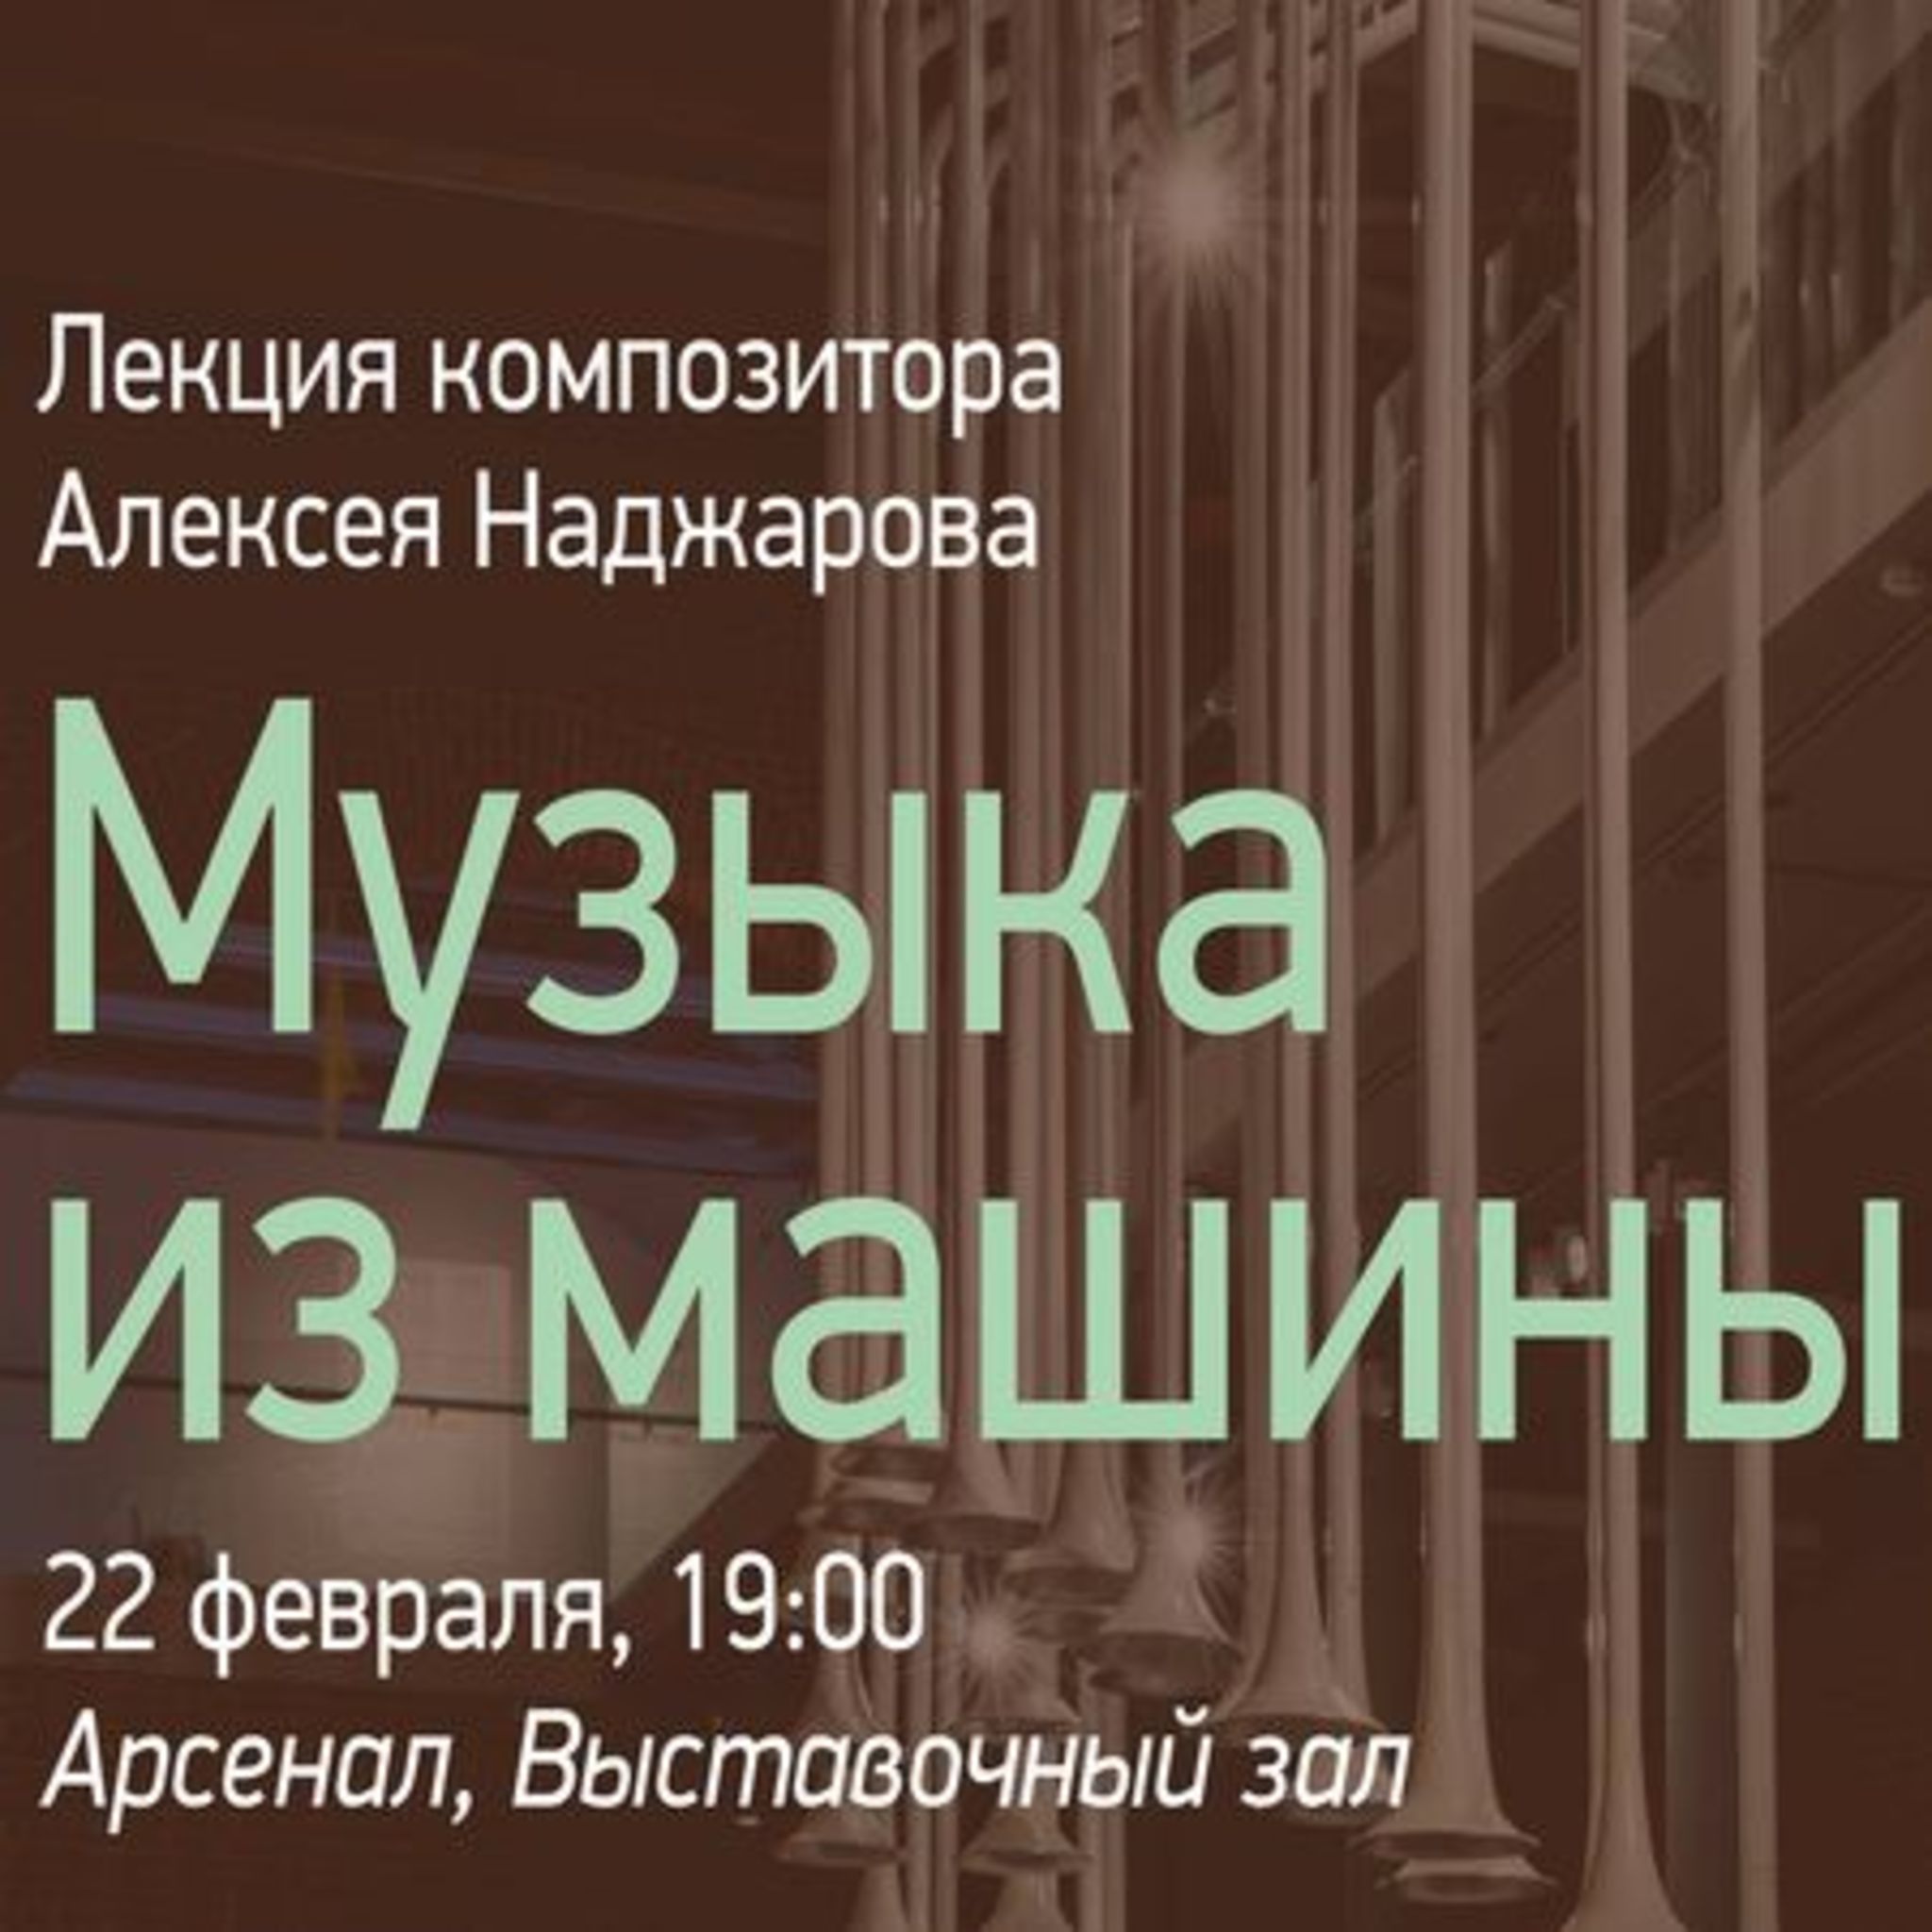 Lecture and seminar Alexei Nadzharova at Arsenal